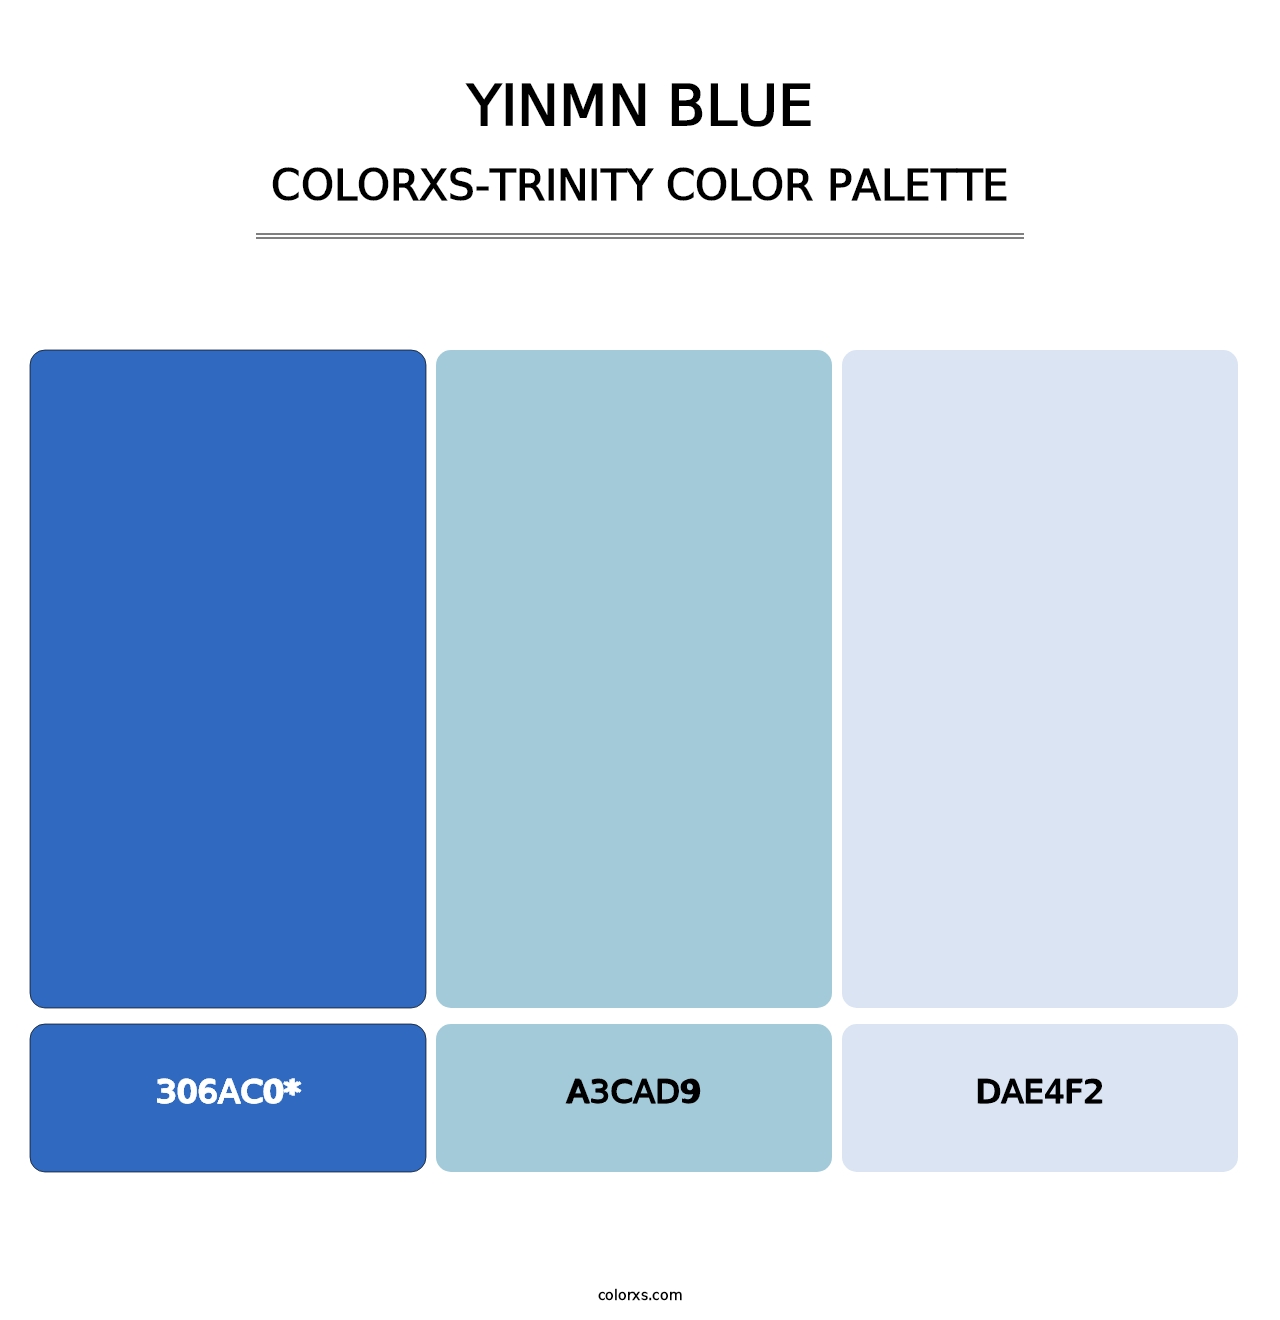 YInMn Blue - Colorxs Trinity Palette